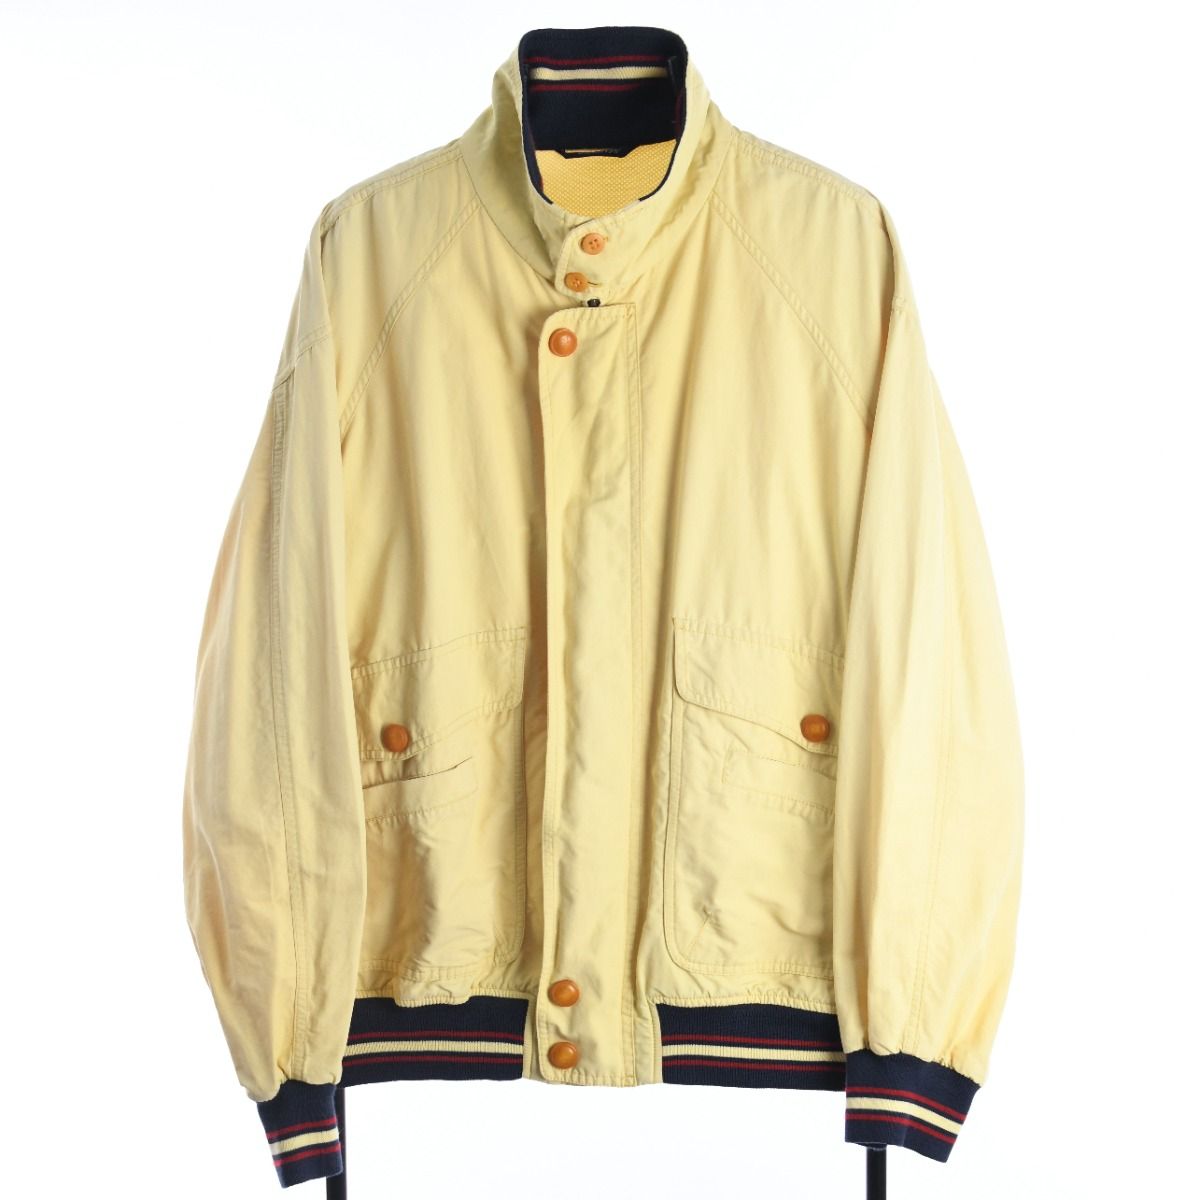 Burberry 1980s Jacket